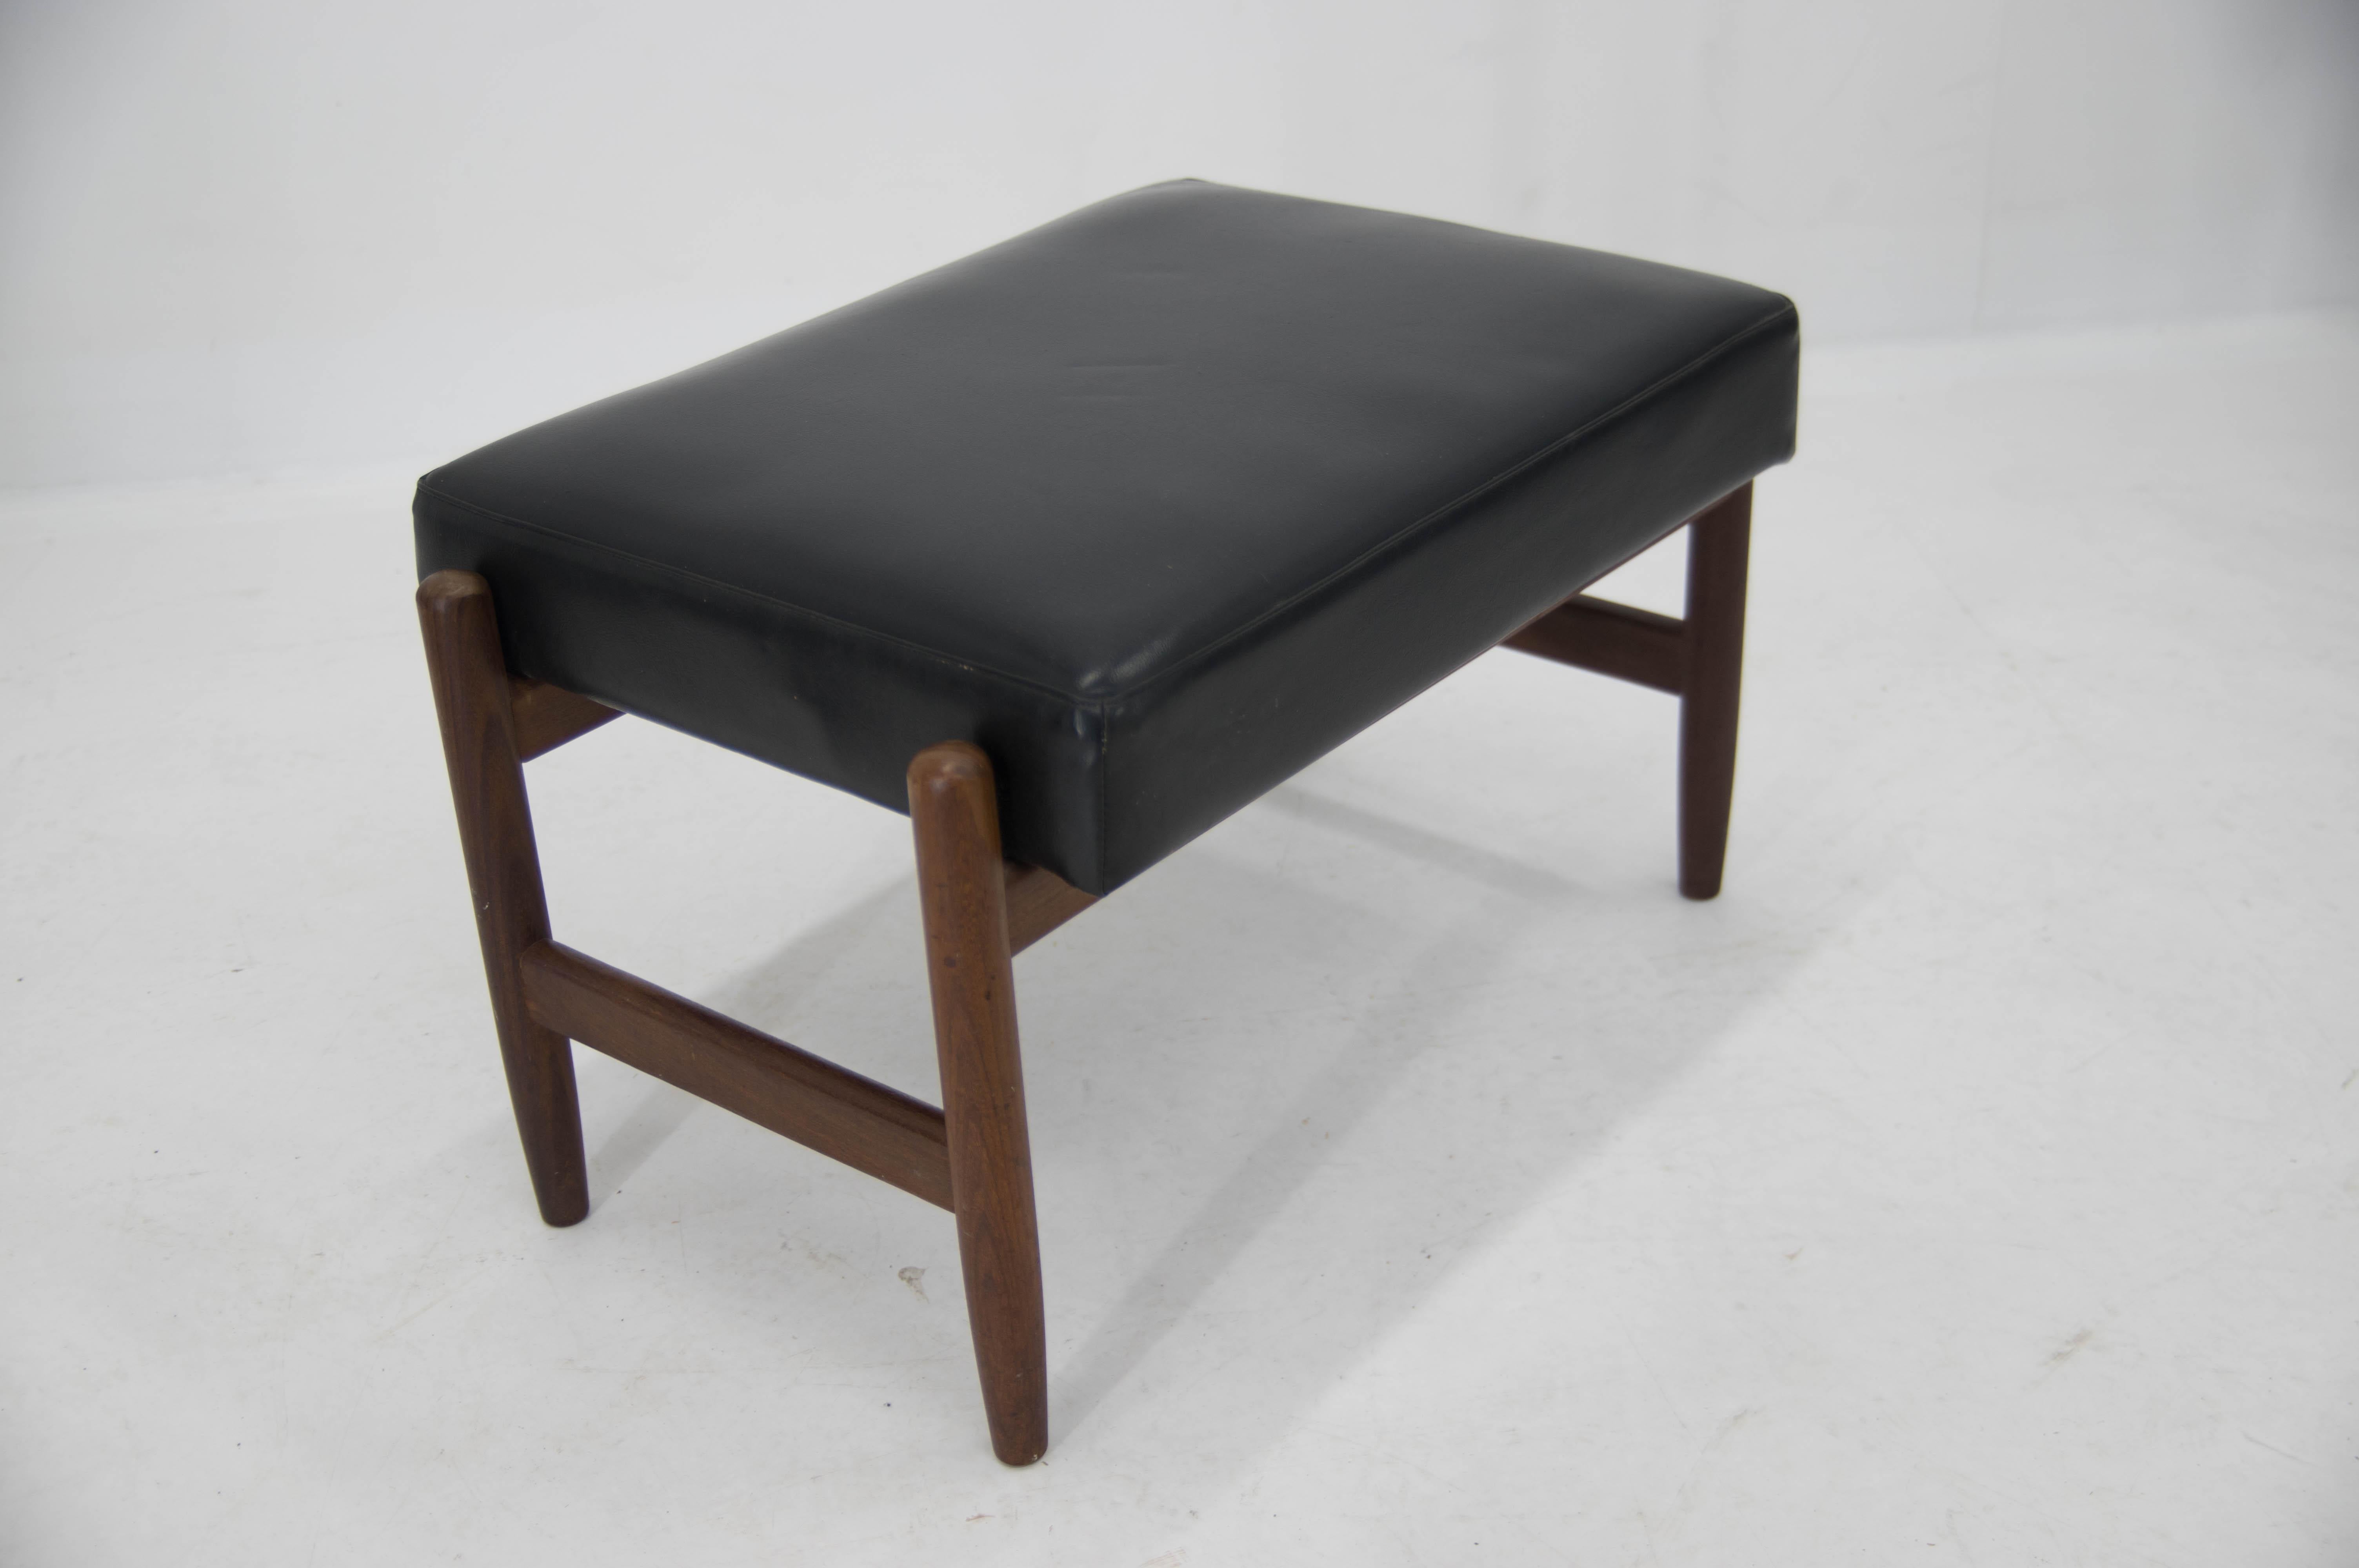 Scandinavian Modern Footrest or Stool in Teak and Black Leather, Denmark, 1960s